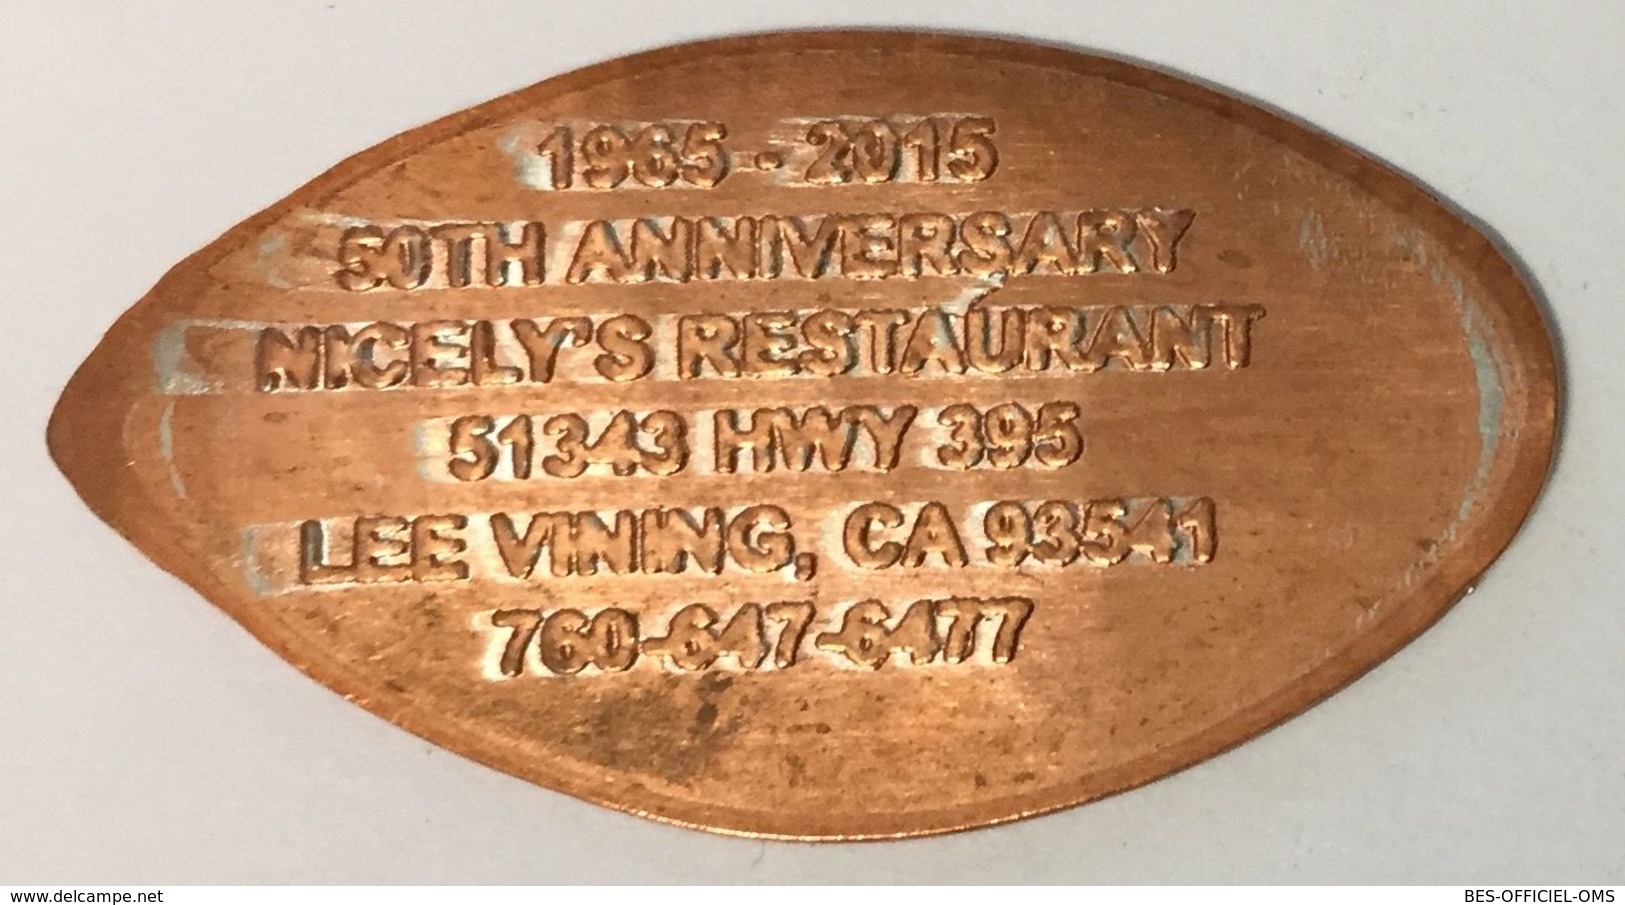 ÉTATS-UNIS USA MONO LAKE LEE VINING CA NICELY'S PENNY 1965-2015 ELONGATED COIN PIÈCE ÉCRASÉE MEDALS TOKENS - Souvenir-Medaille (elongated Coins)